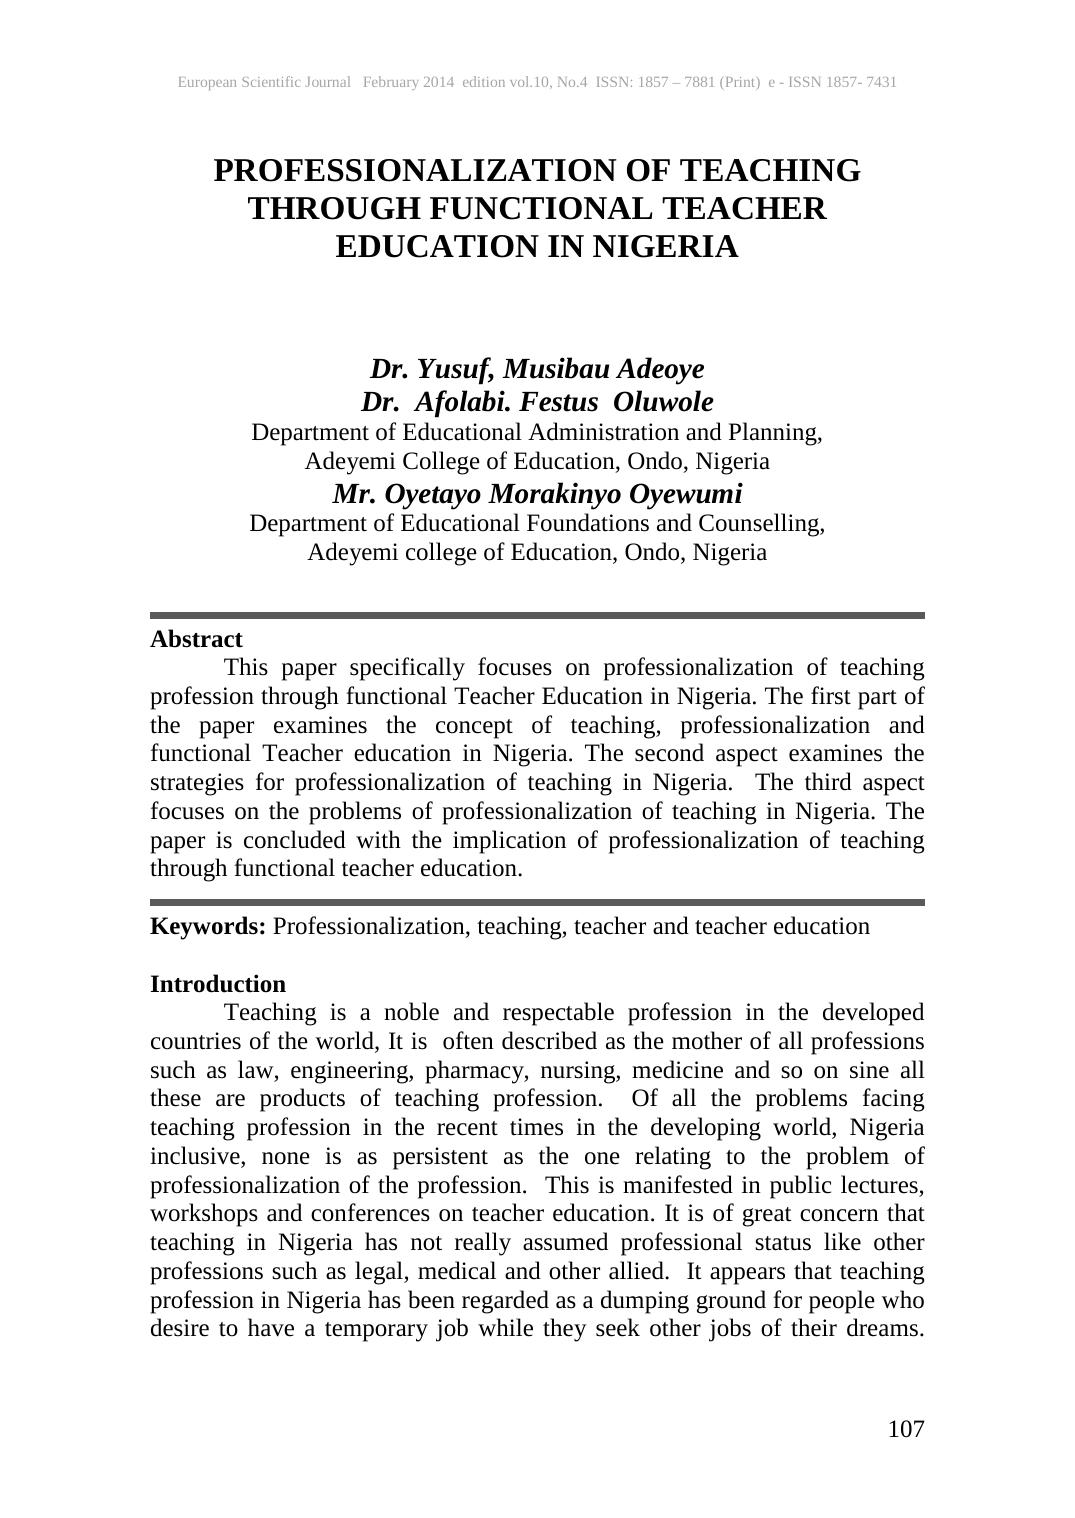 PROFESSIONALIZATION OF TEACHER IN NIGERIA EDUCATION  2014